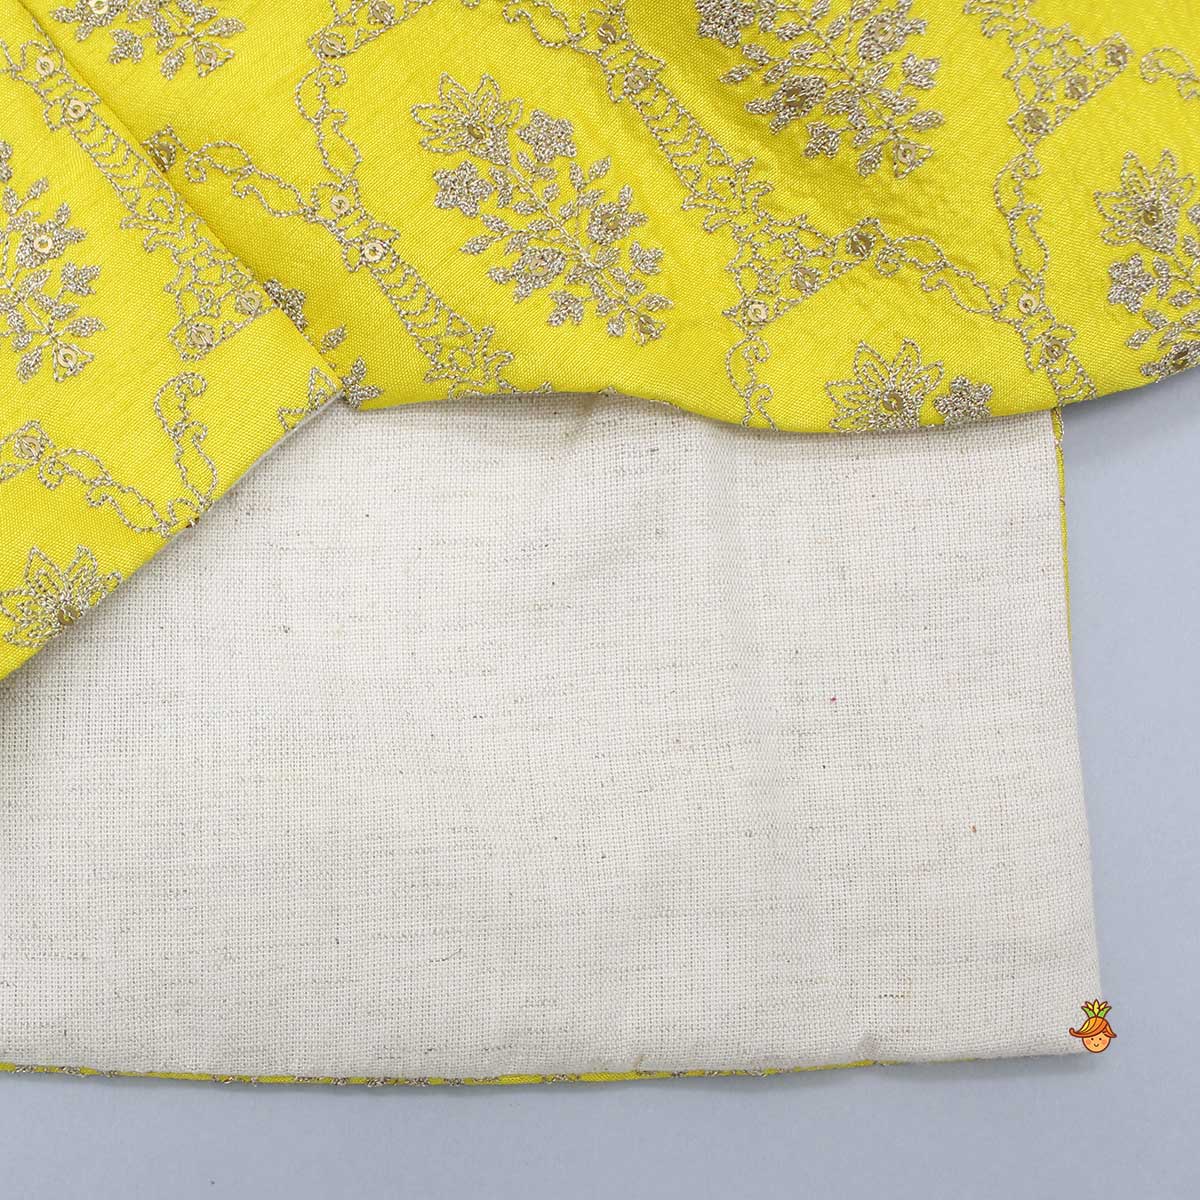 Charming Yellow Front Open Asymmetric Sherwani And Pyjama